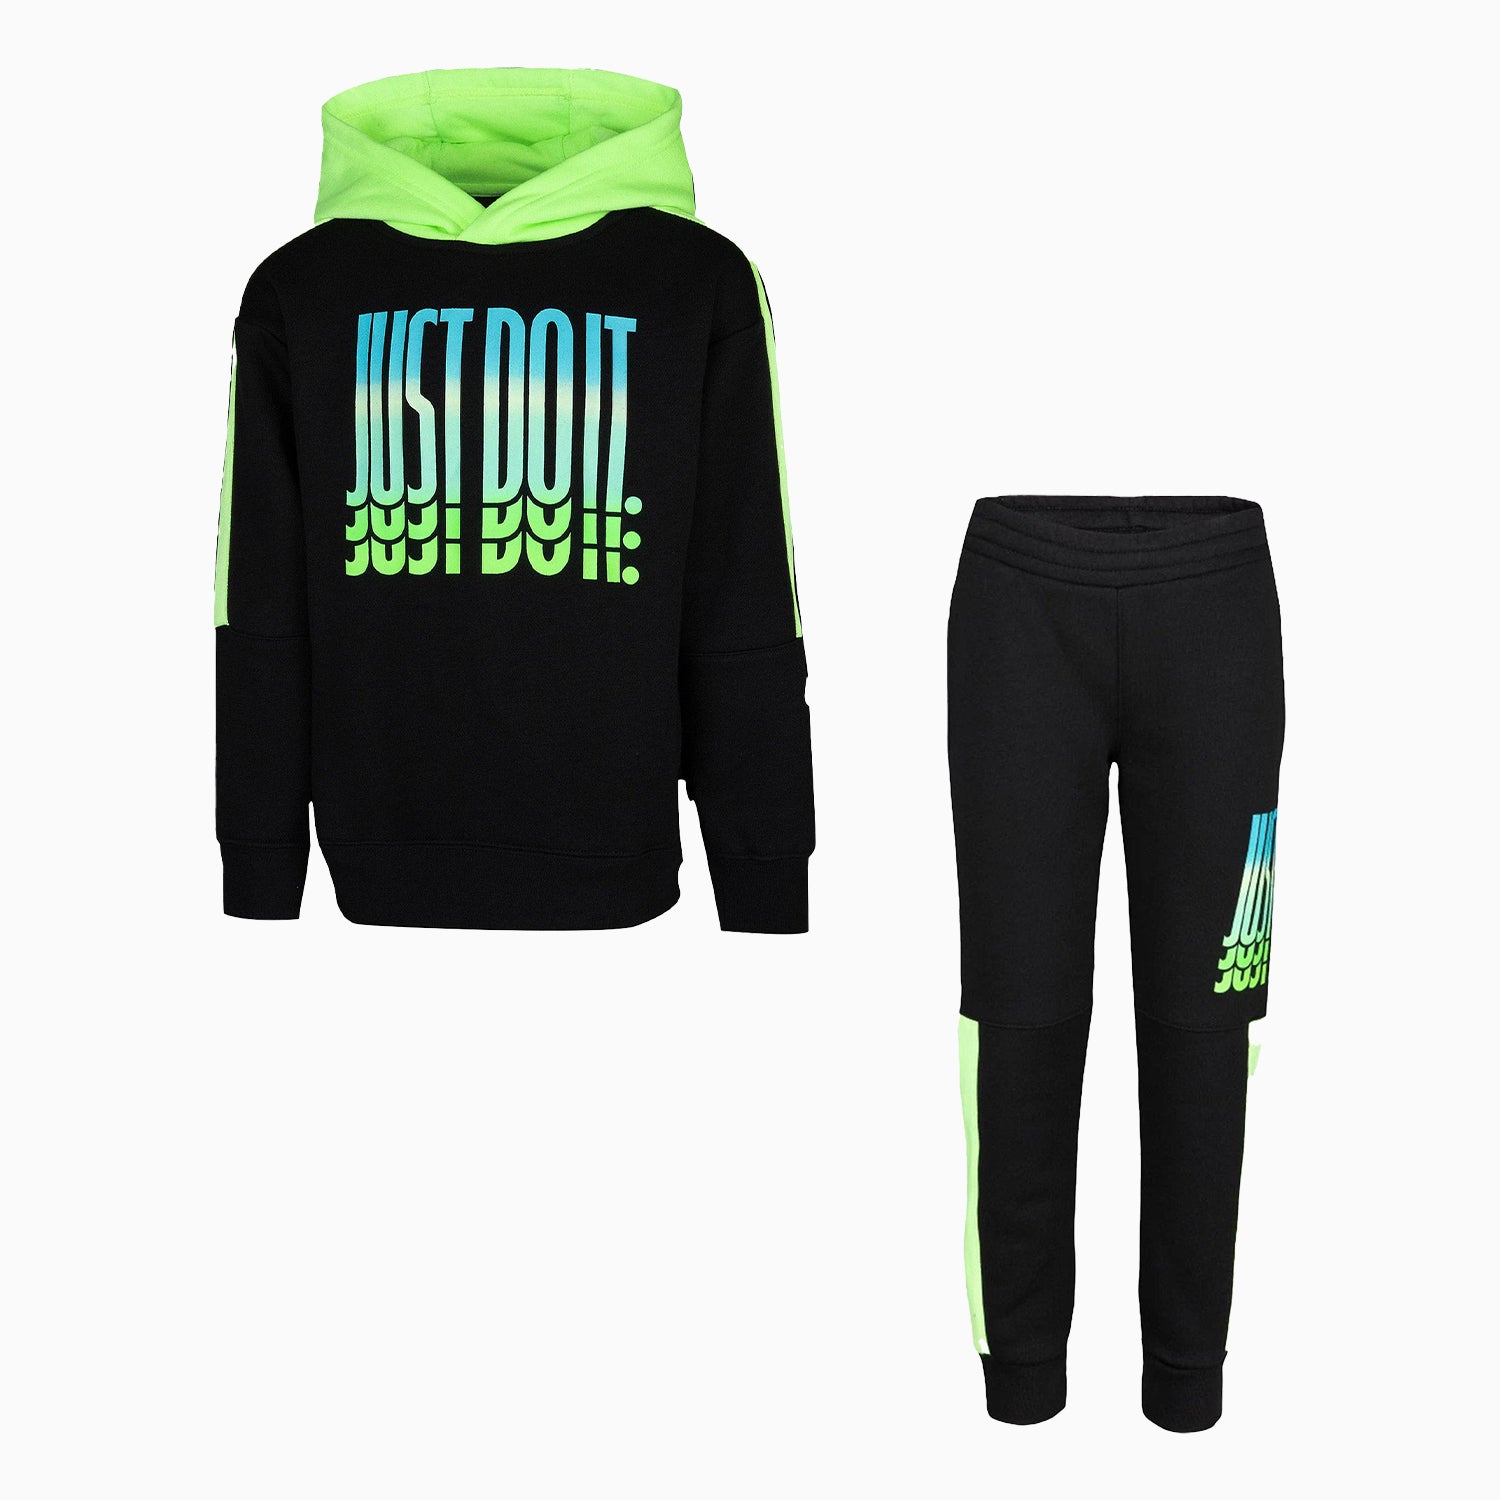 nike-kids-middle-color-logo-jogging-suit-86h936-023-86h992-023